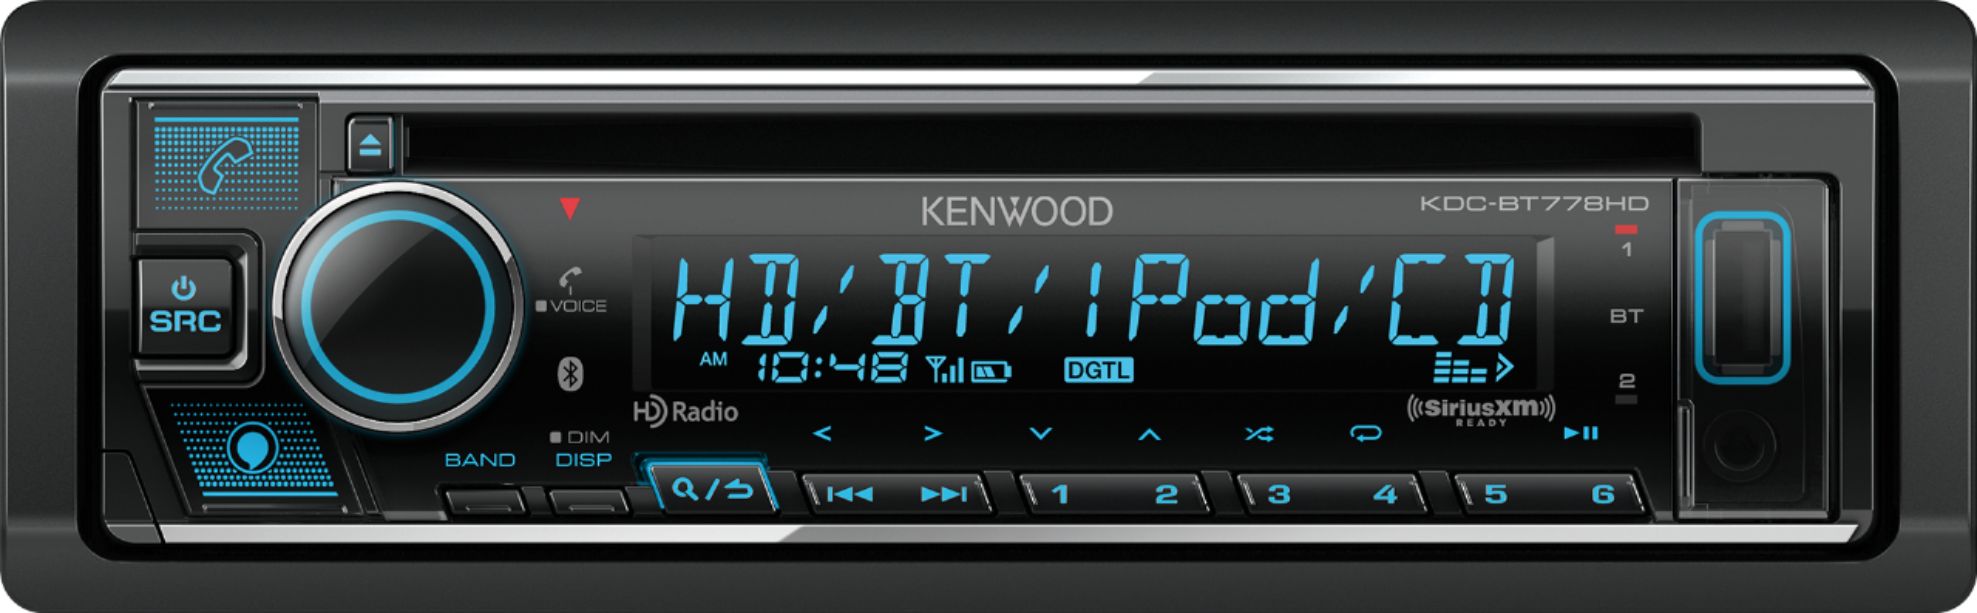 Kenwood Dual-DIN USB/AAC/WMA/MP3 CD Receiver Dash Kit 1992 Chevy GMC Pontiac 